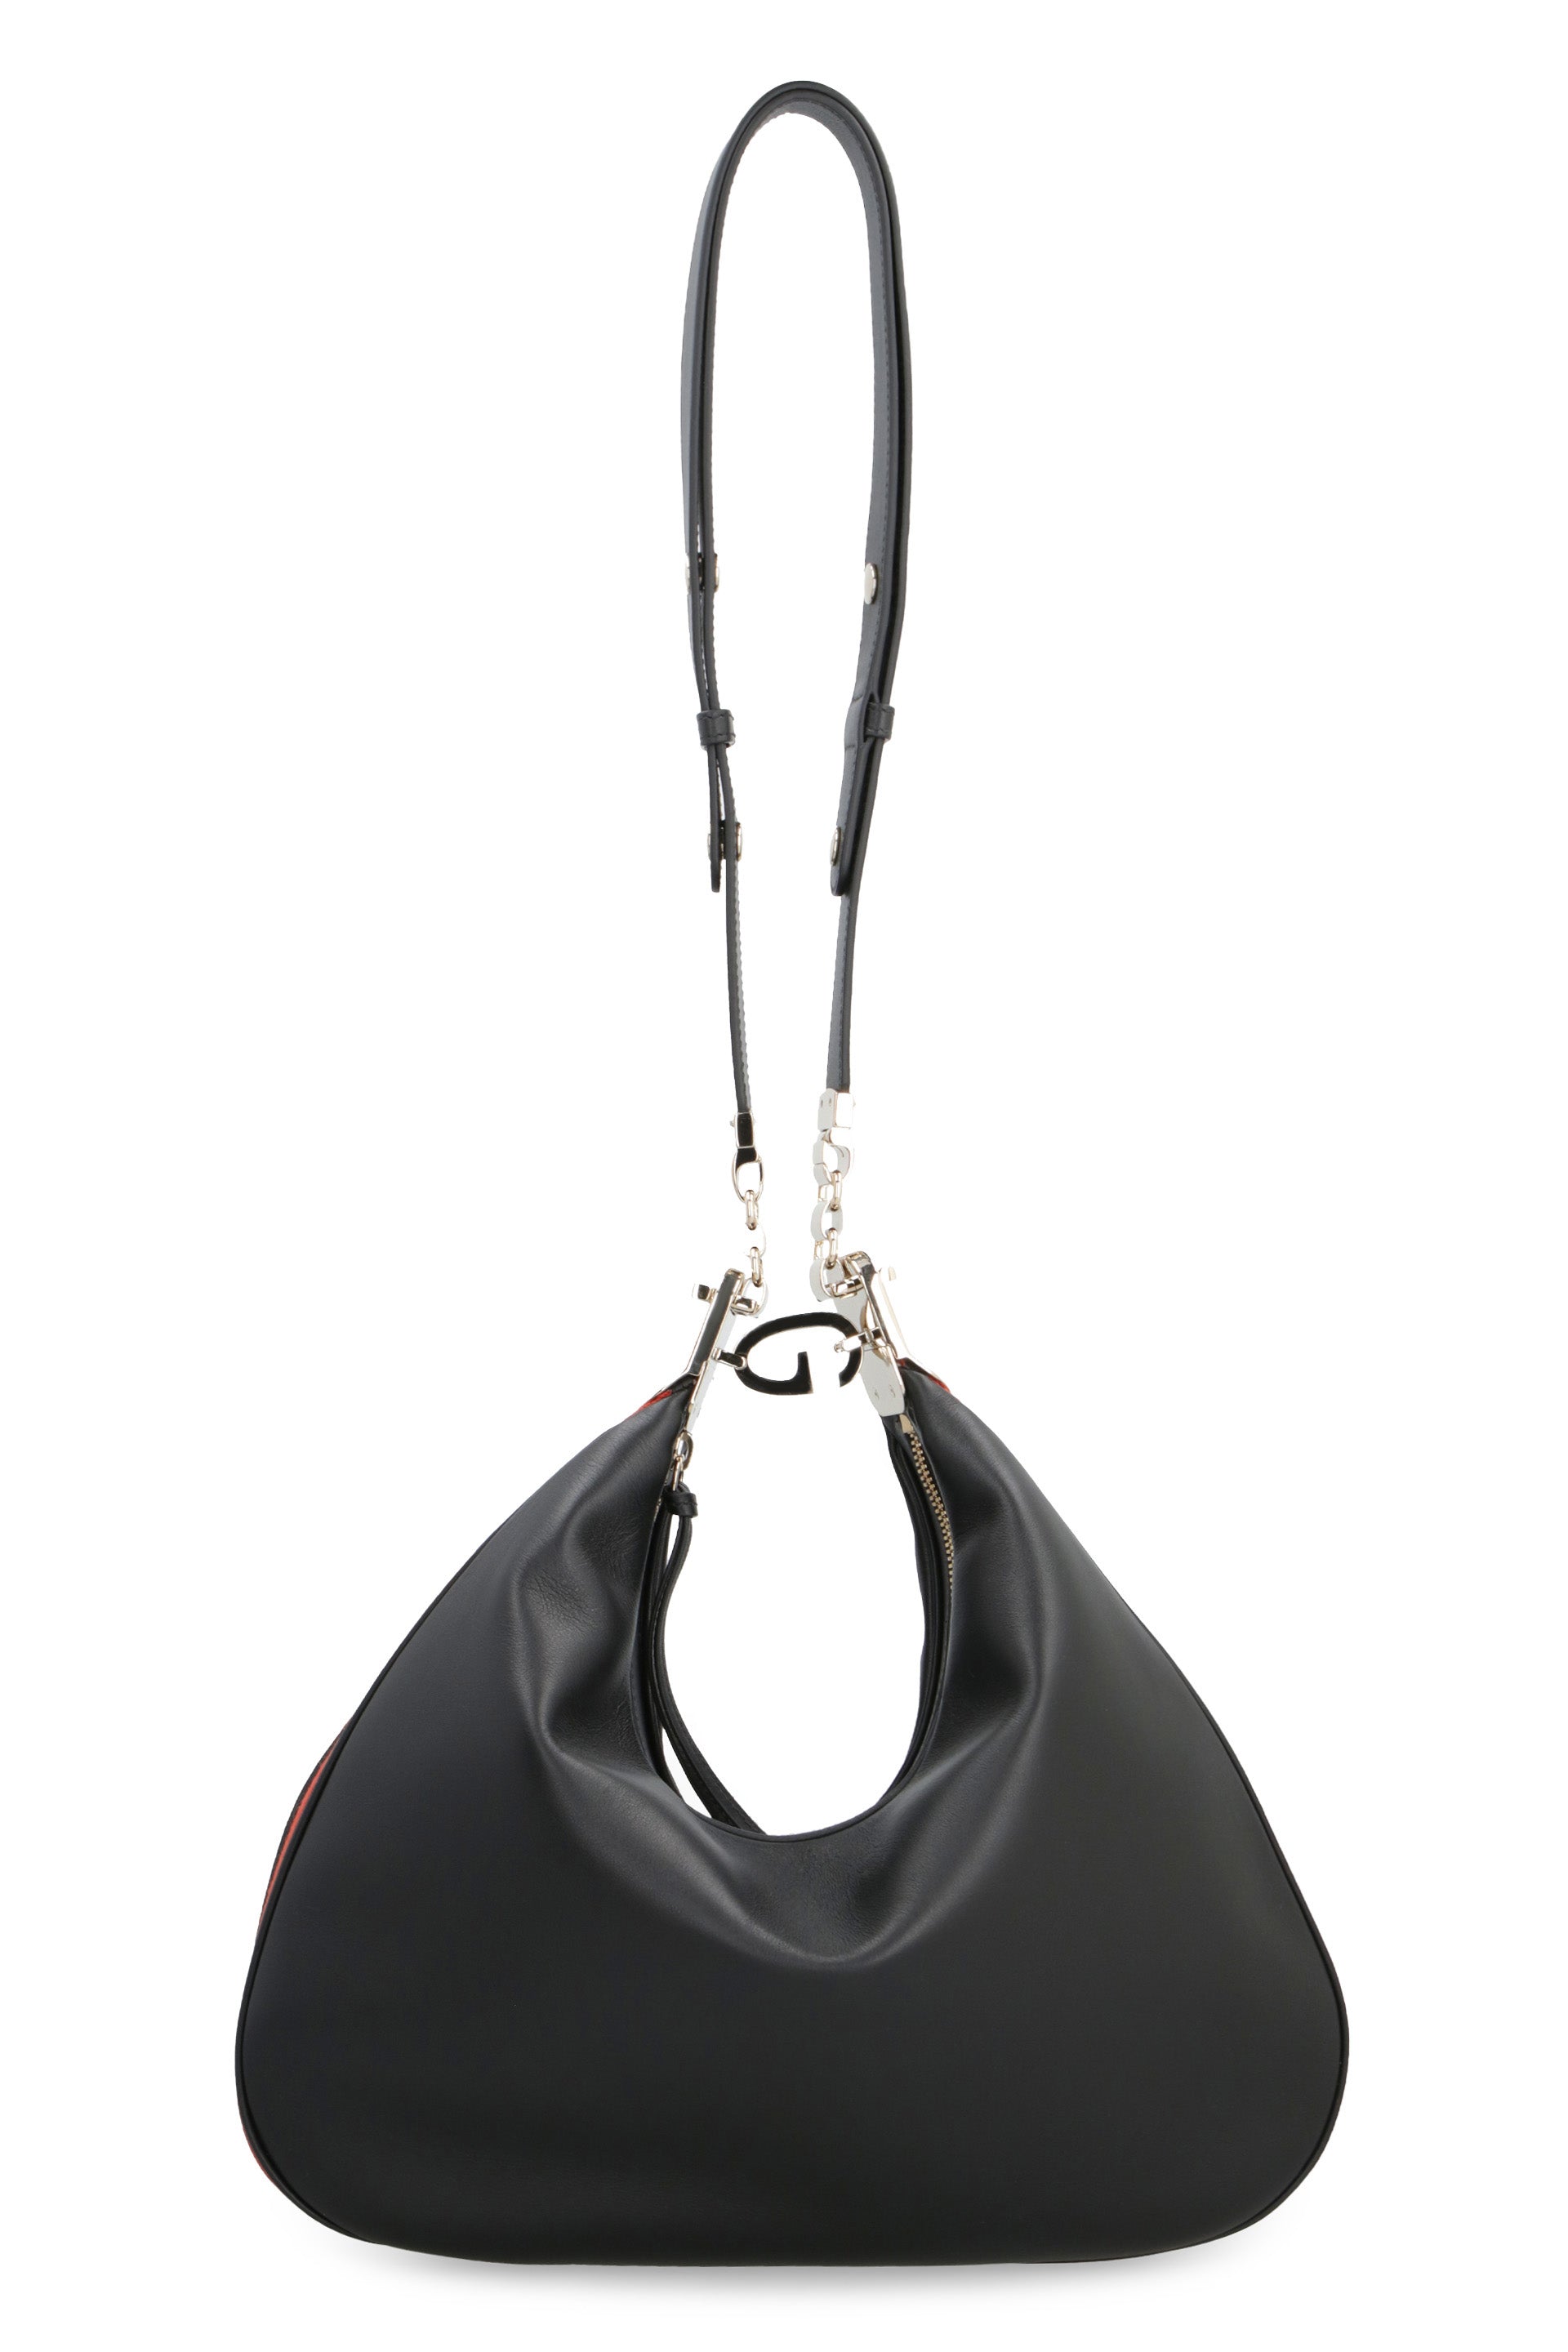 Gucci Attache medium shoulder bag in black leather